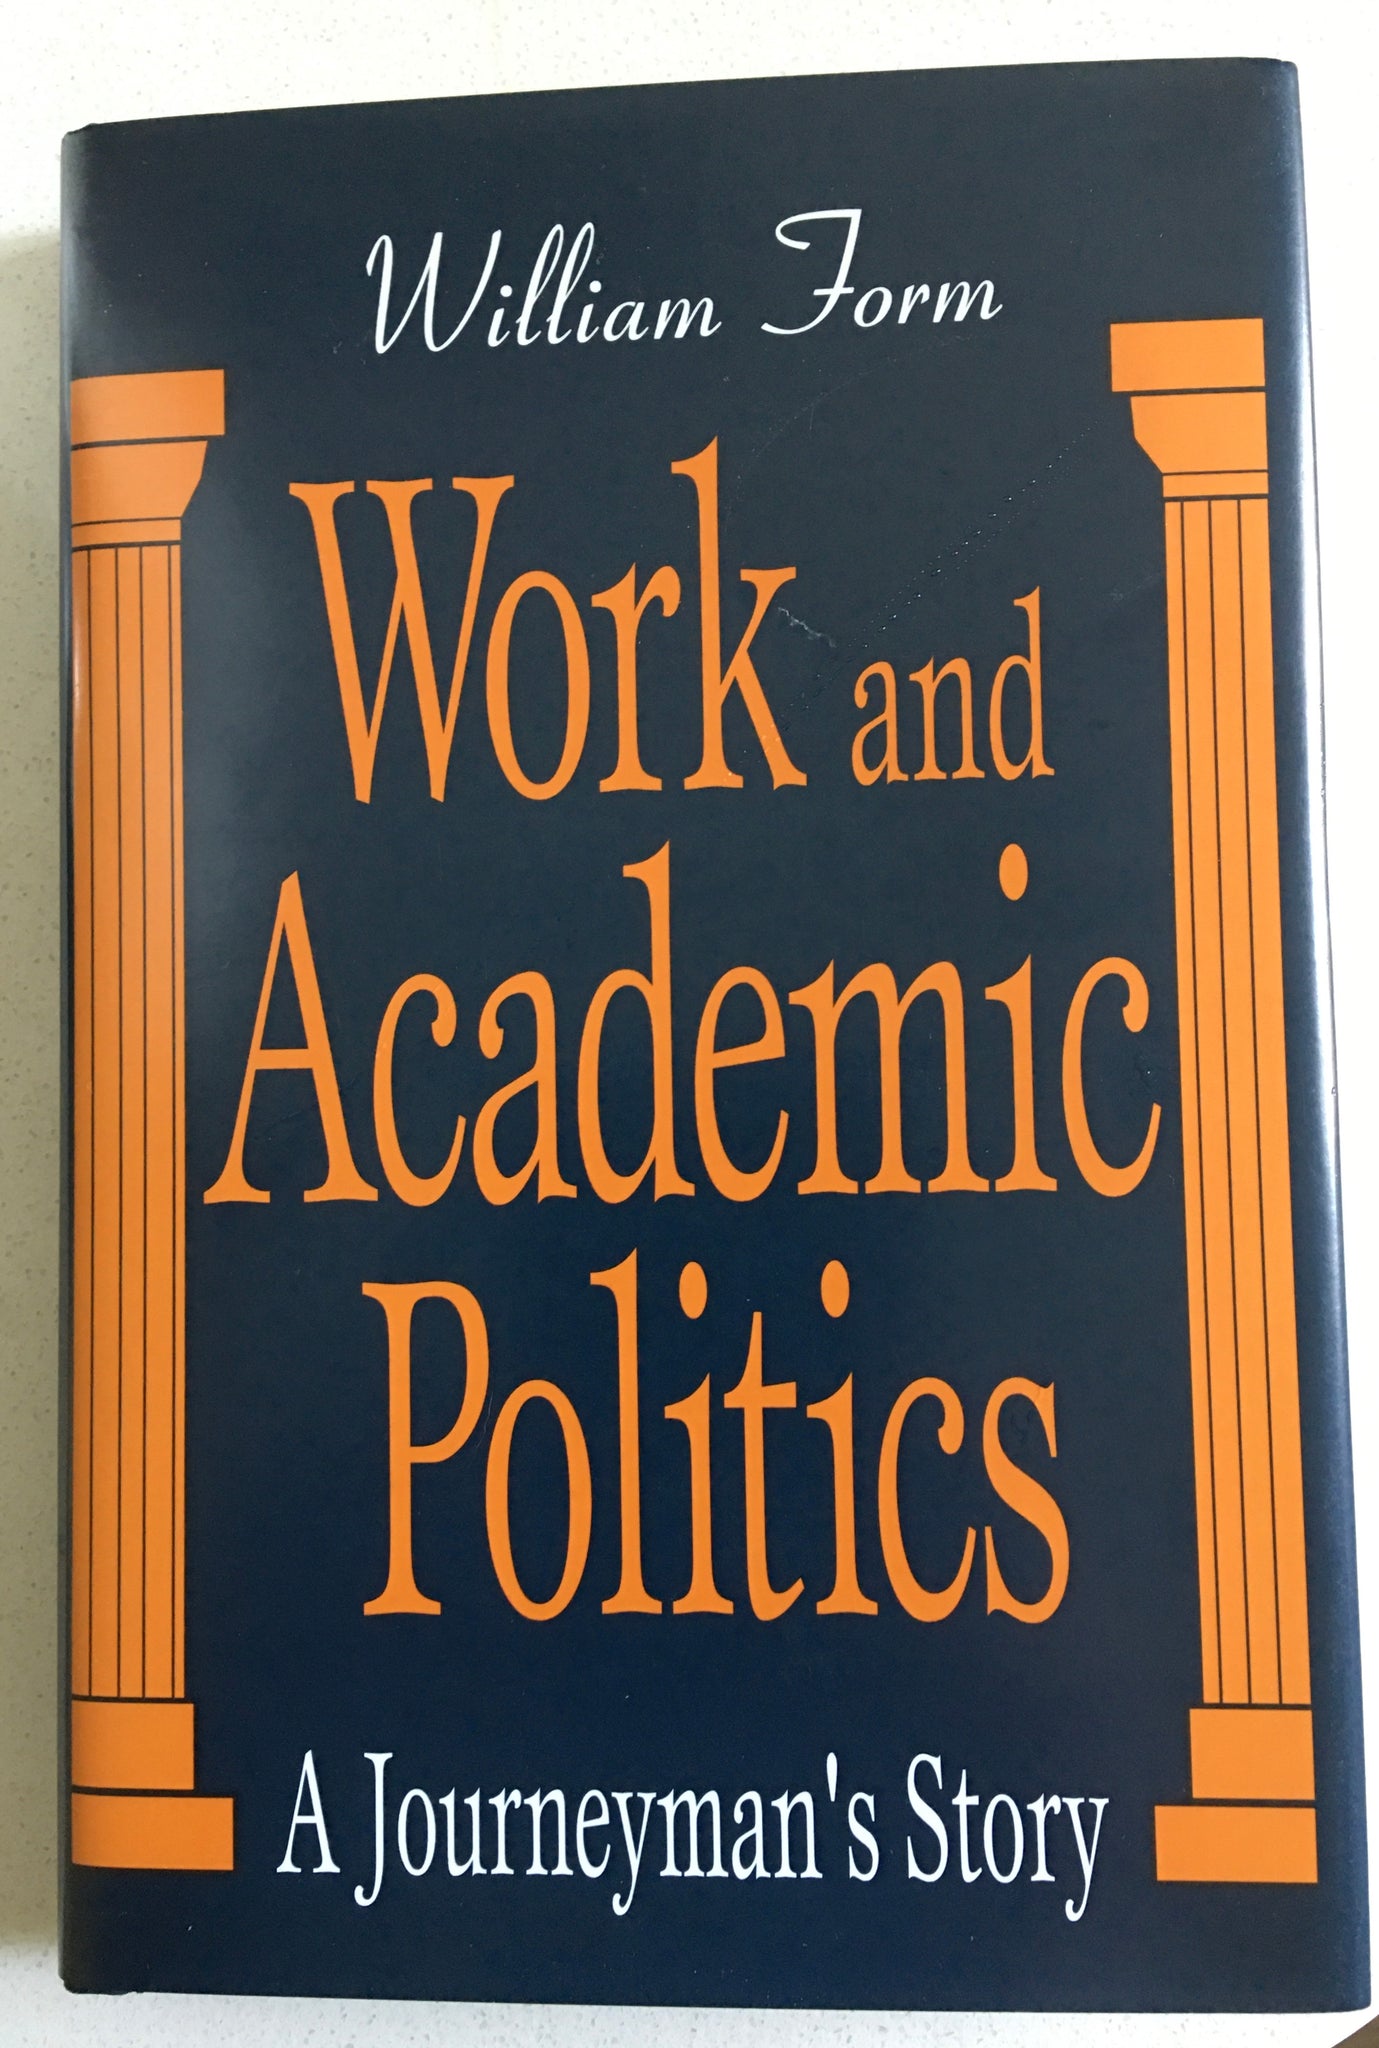 Work and Academic politics: A Journeyman's Story